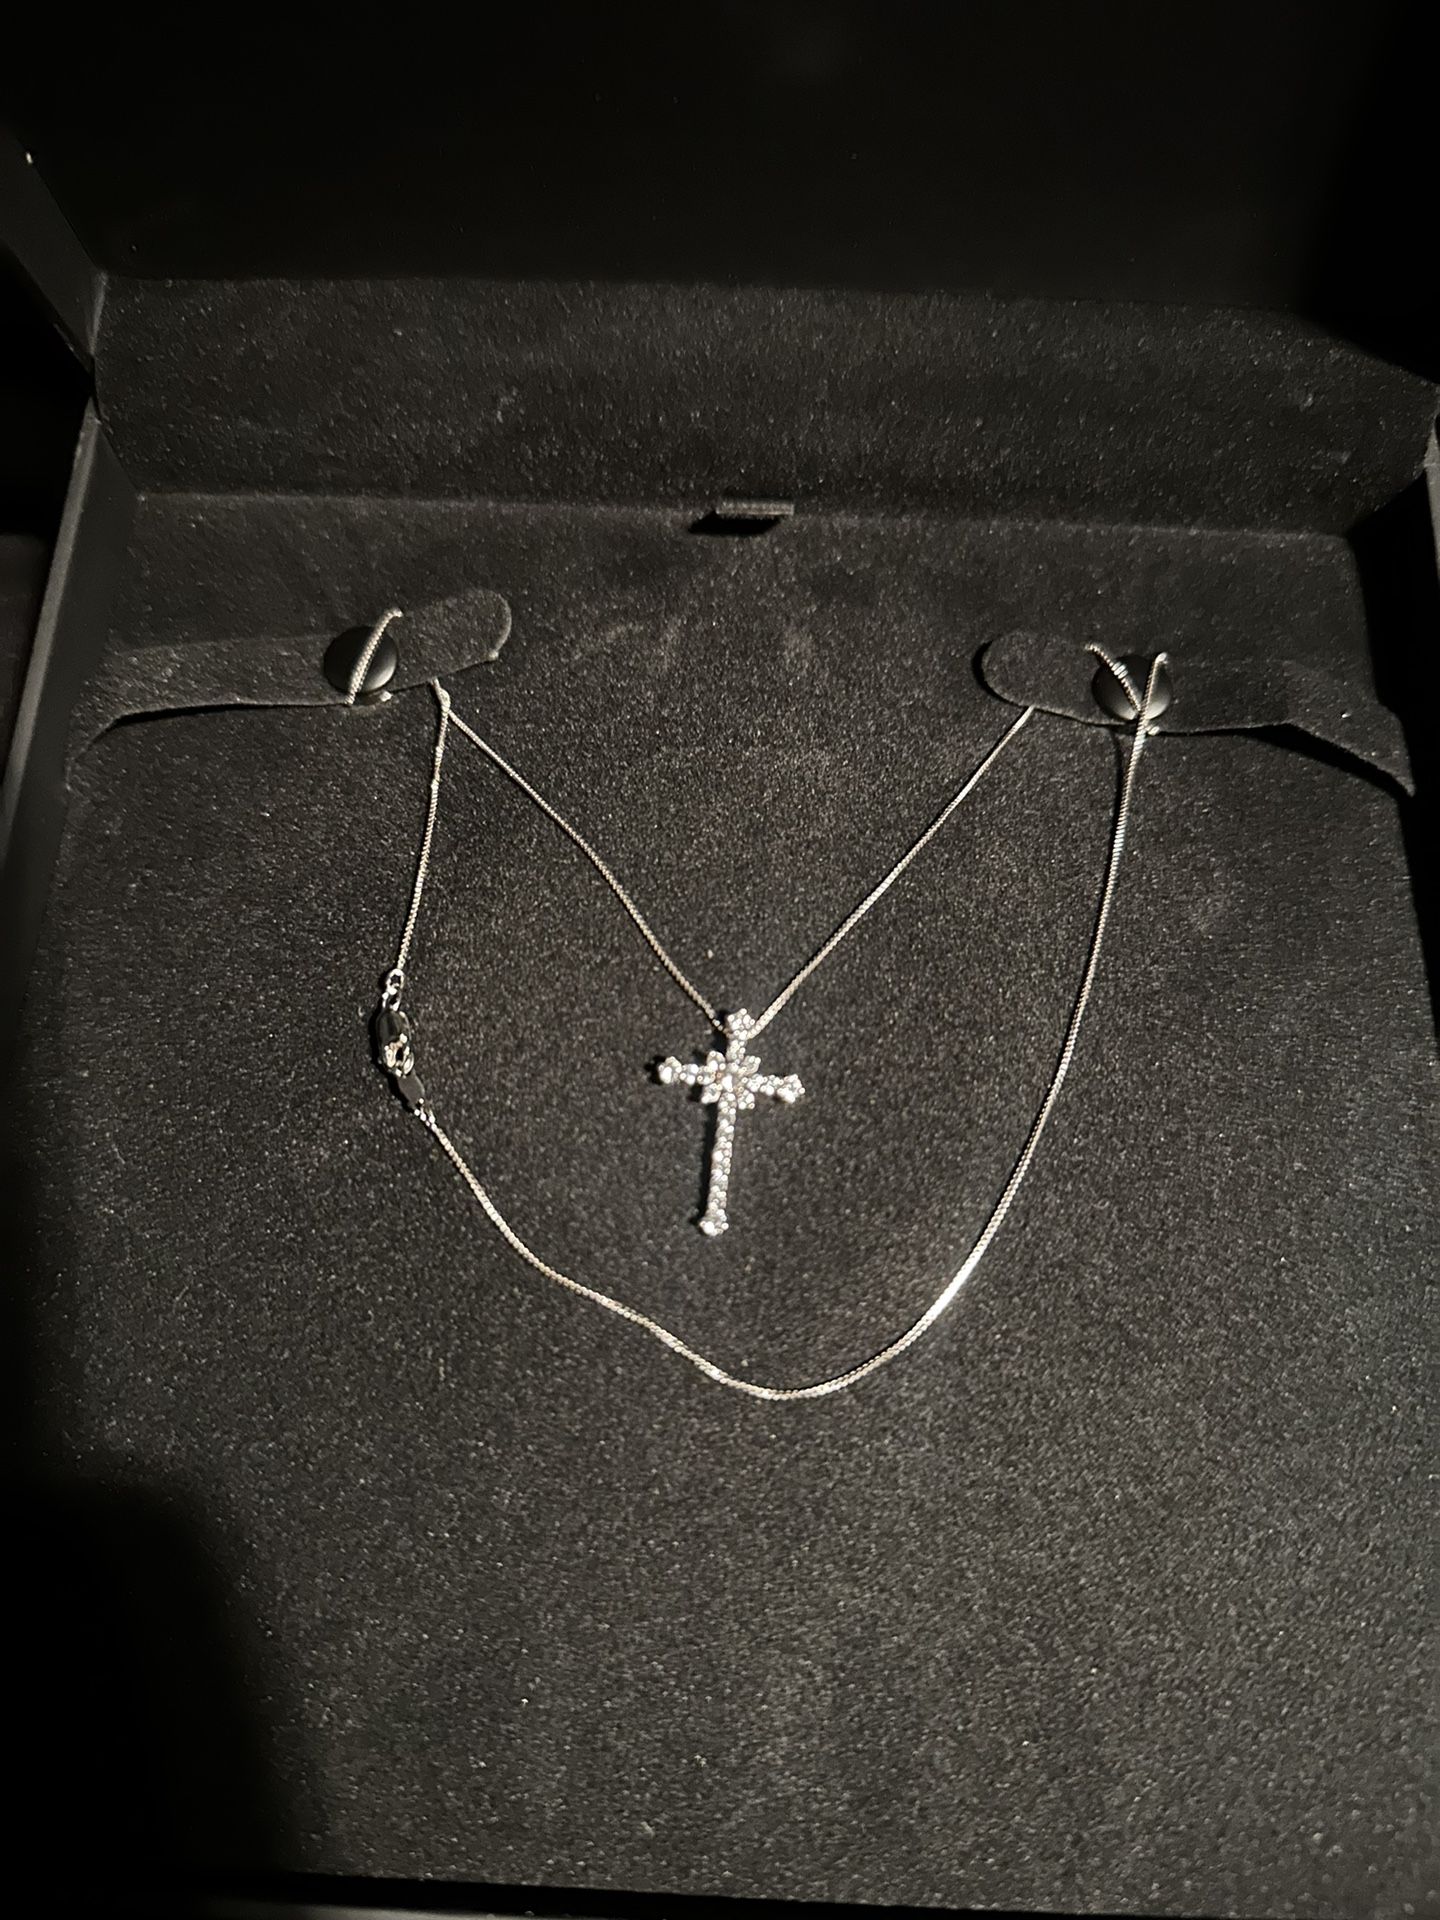 kay’s cross necklace 